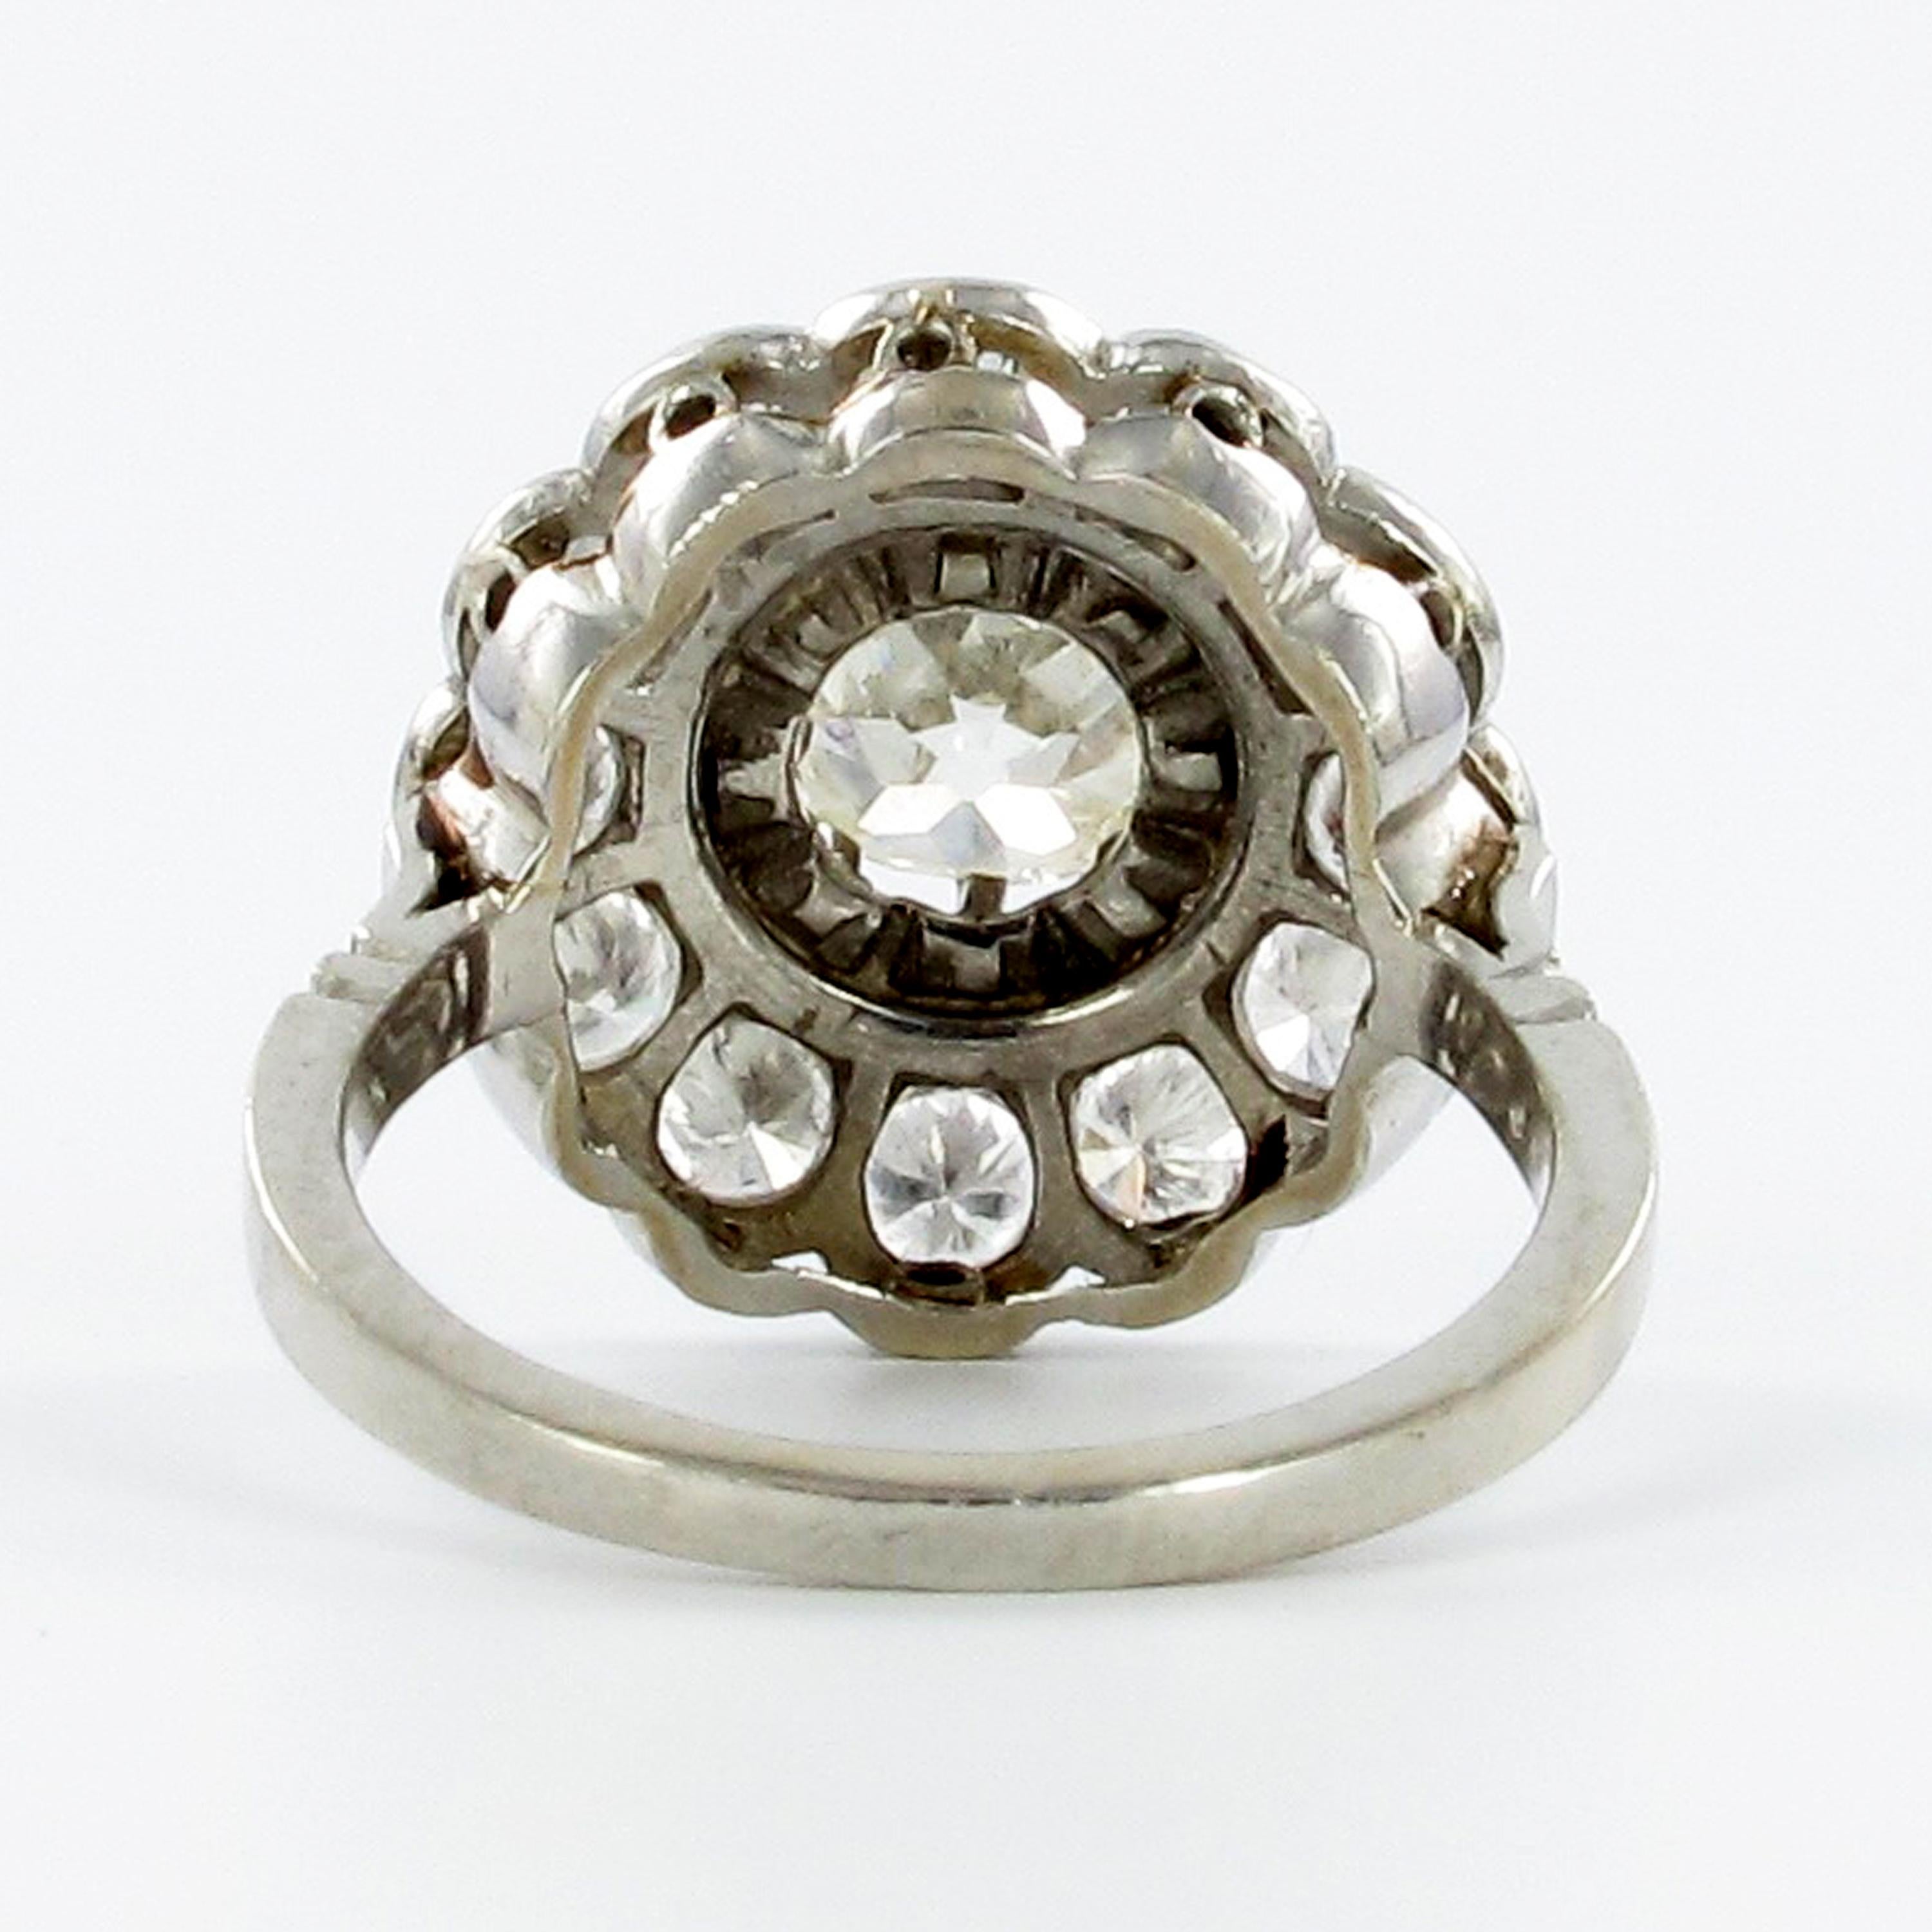 Victorian Old Cut Diamond Cluster Ring in Platinum